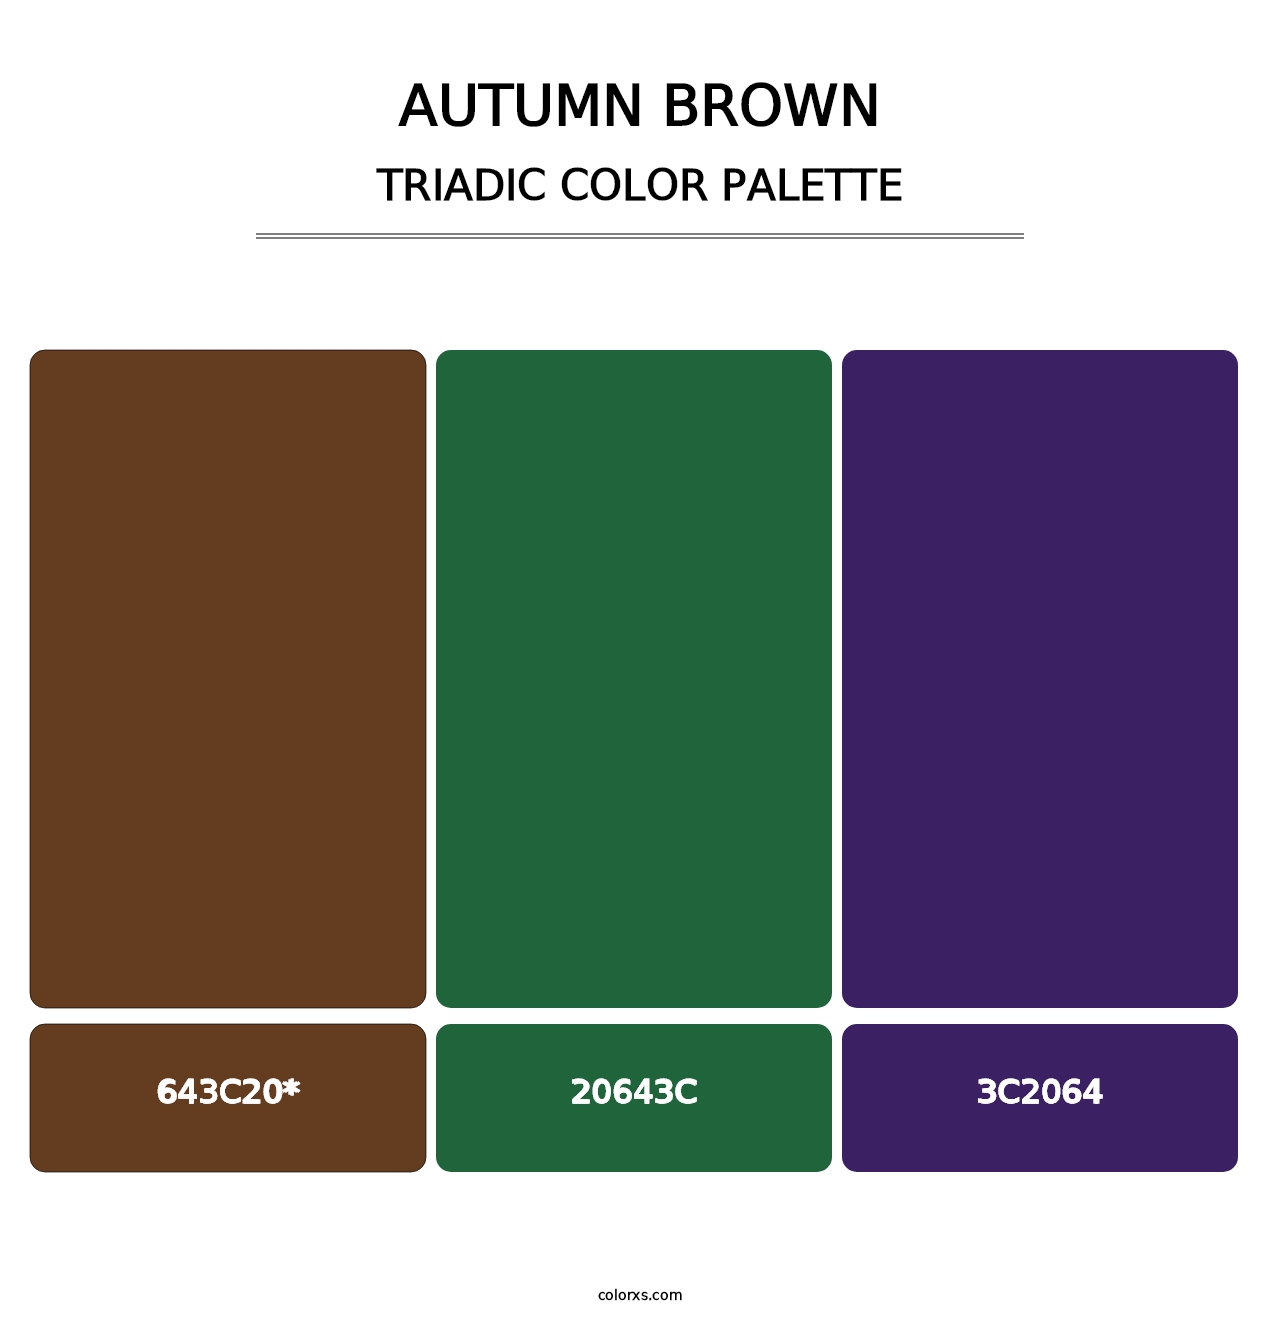 Autumn Brown - Triadic Color Palette